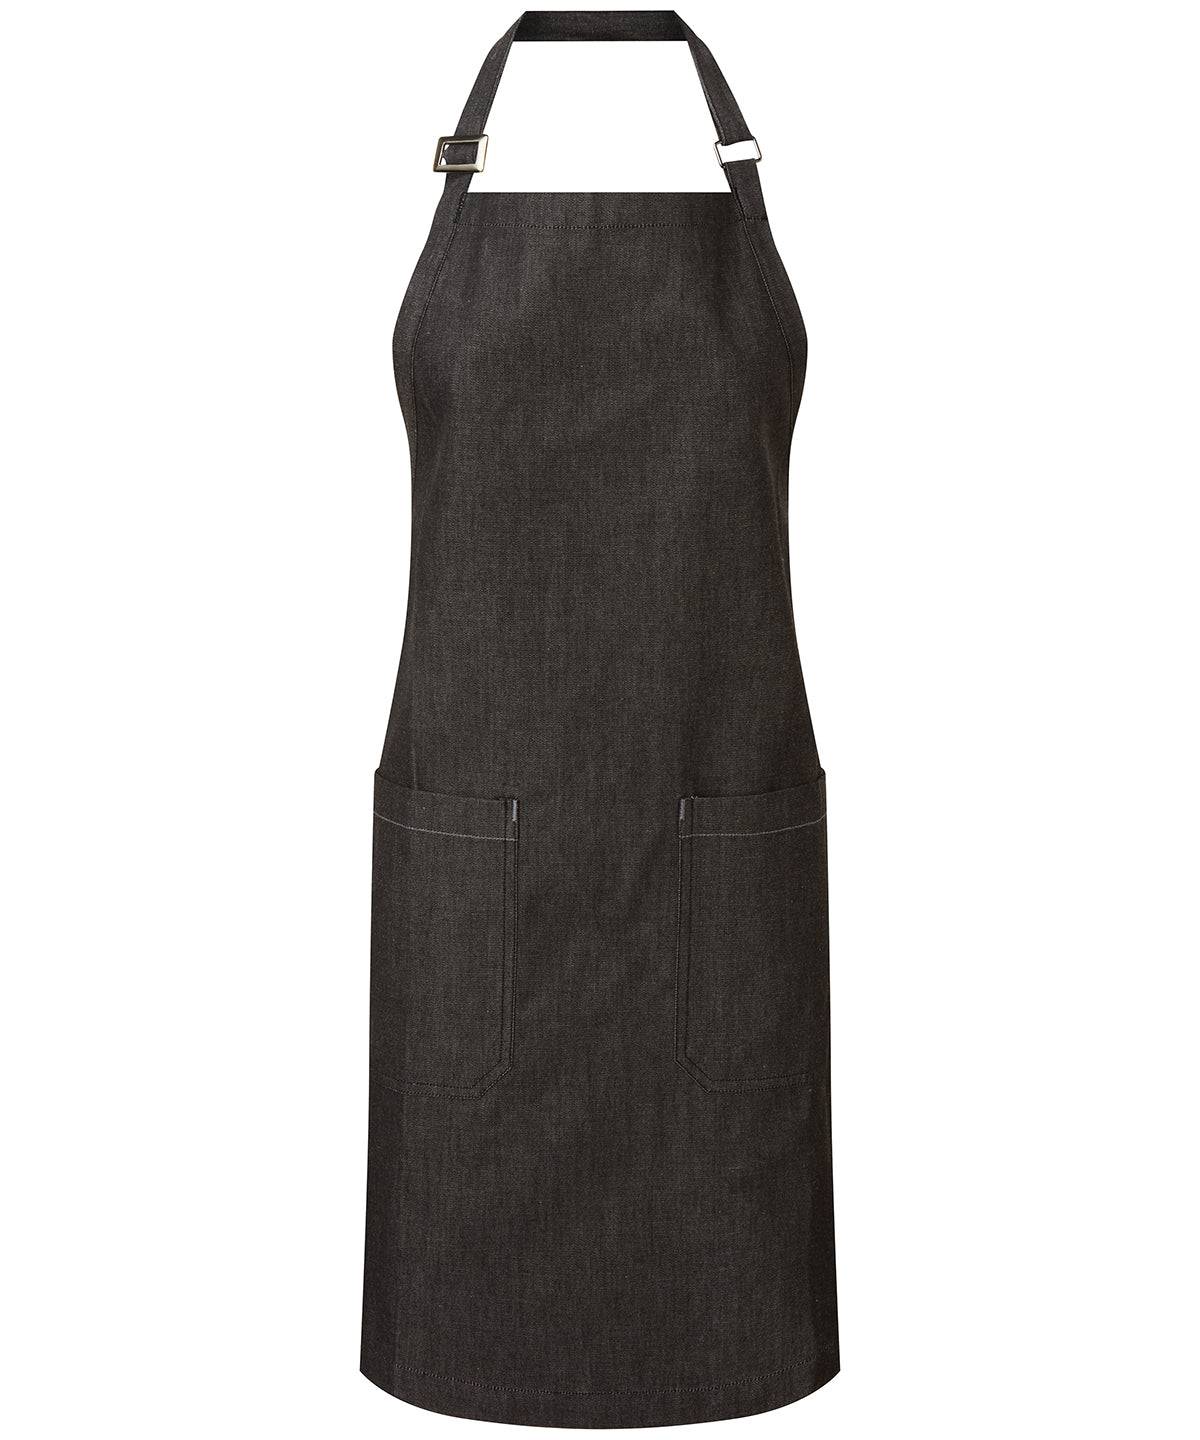 Black Denim - Cotton denim bib apron, organic and Fairtrade certified